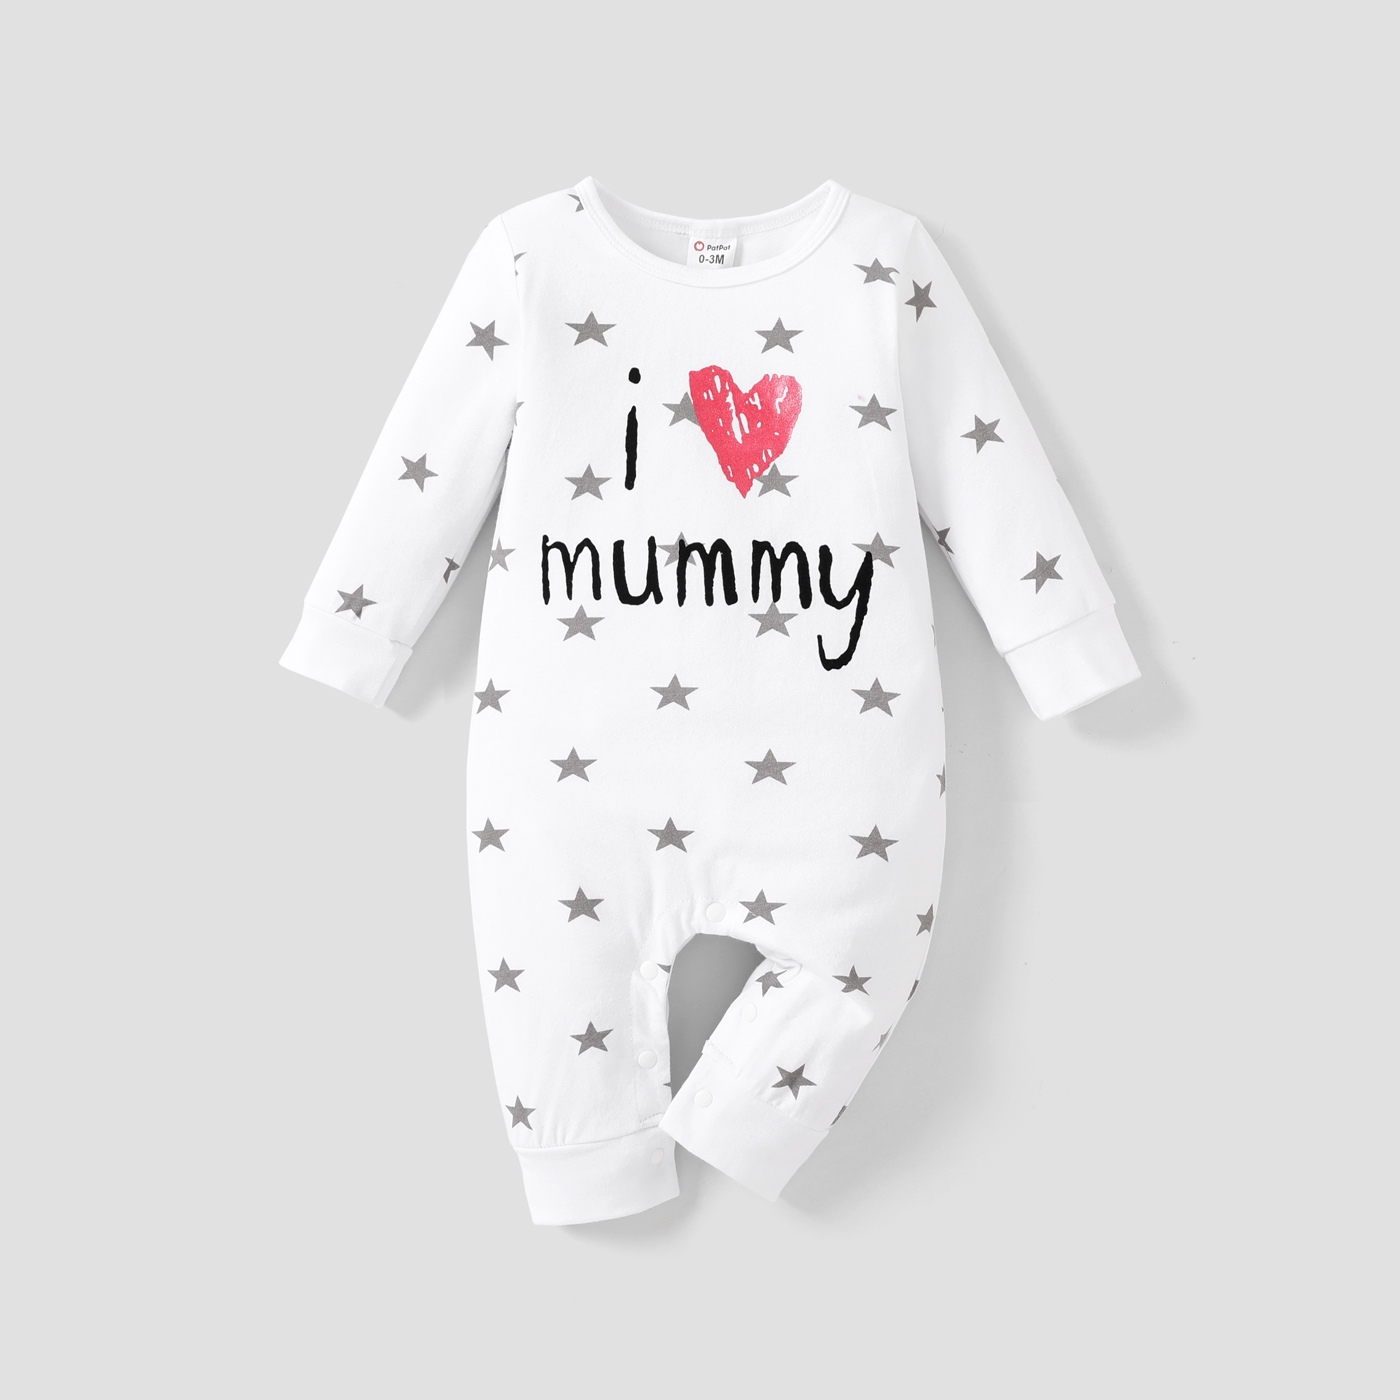 Pijama maternal y de lactancia - Kuna Matata